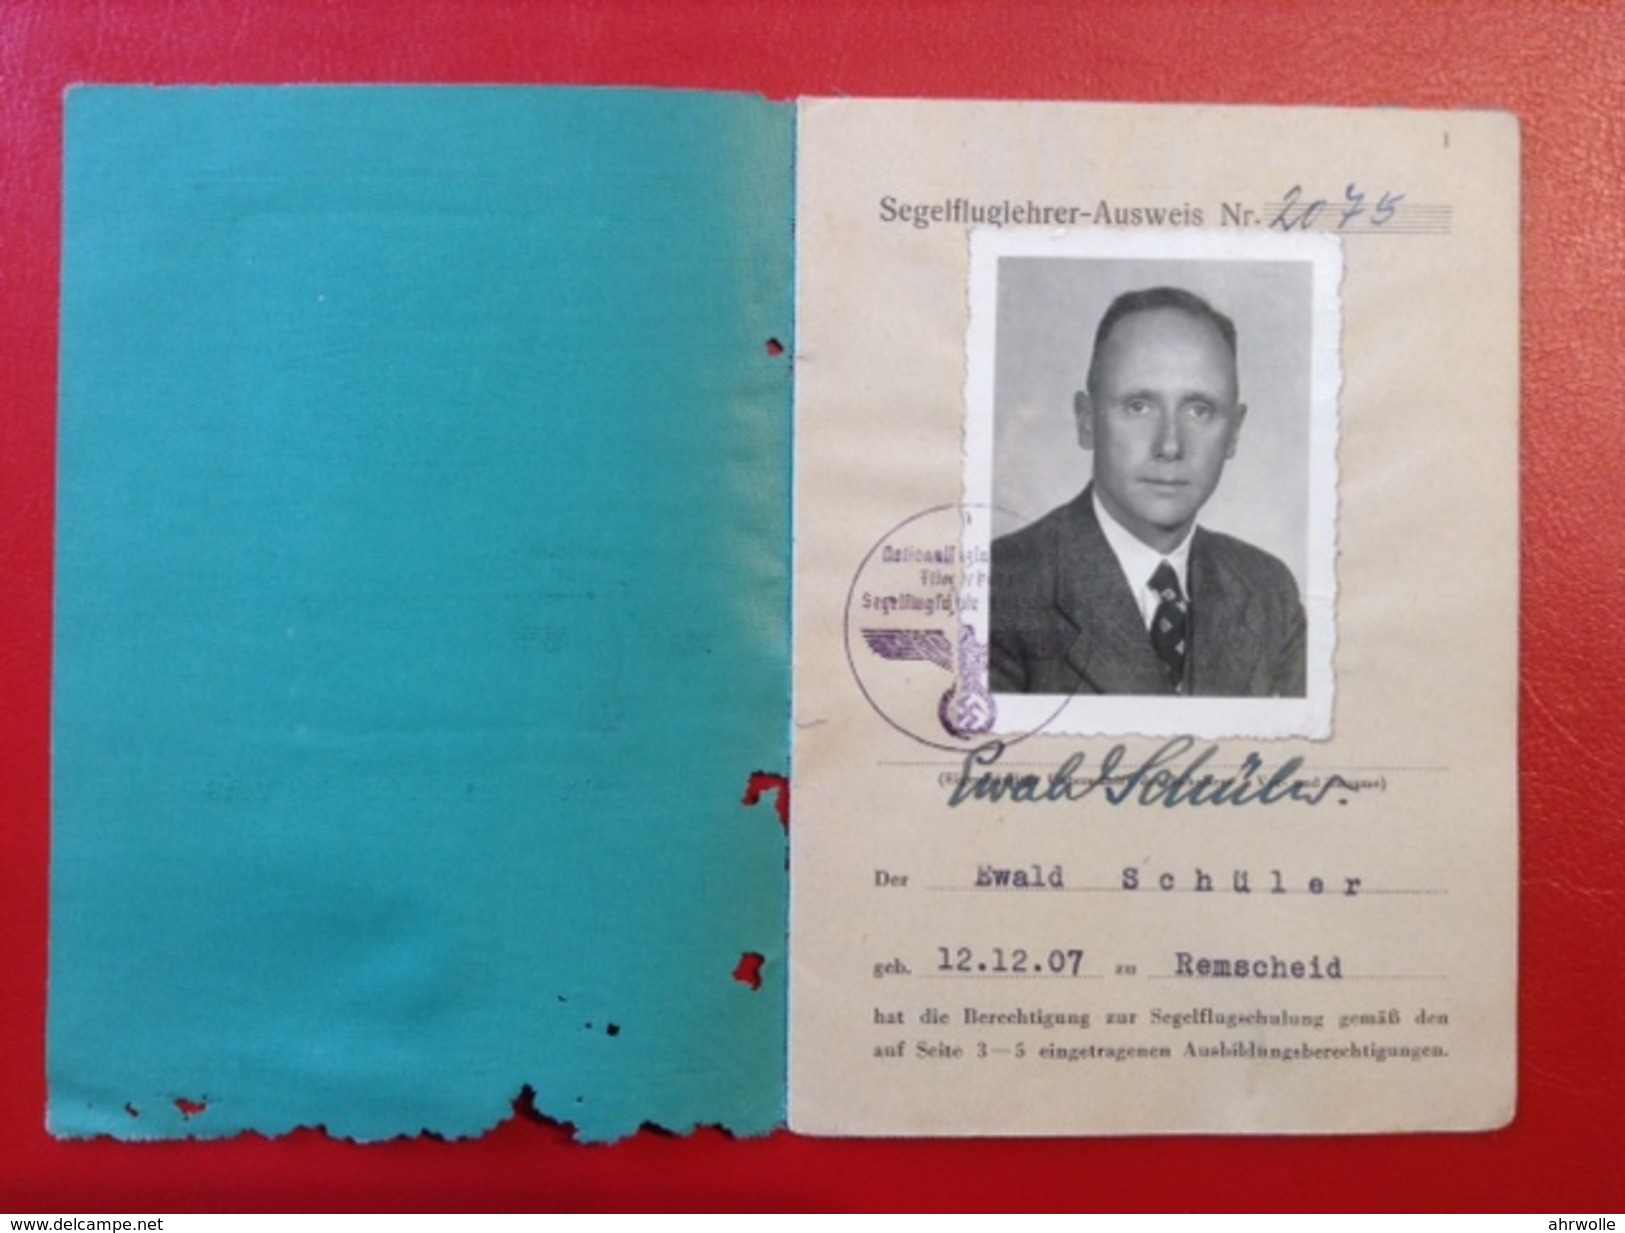 NSFK Segelfluglehrer-Ausweis WW2 Remscheid 1944 Segelflugschule Ballenstedt - Documents